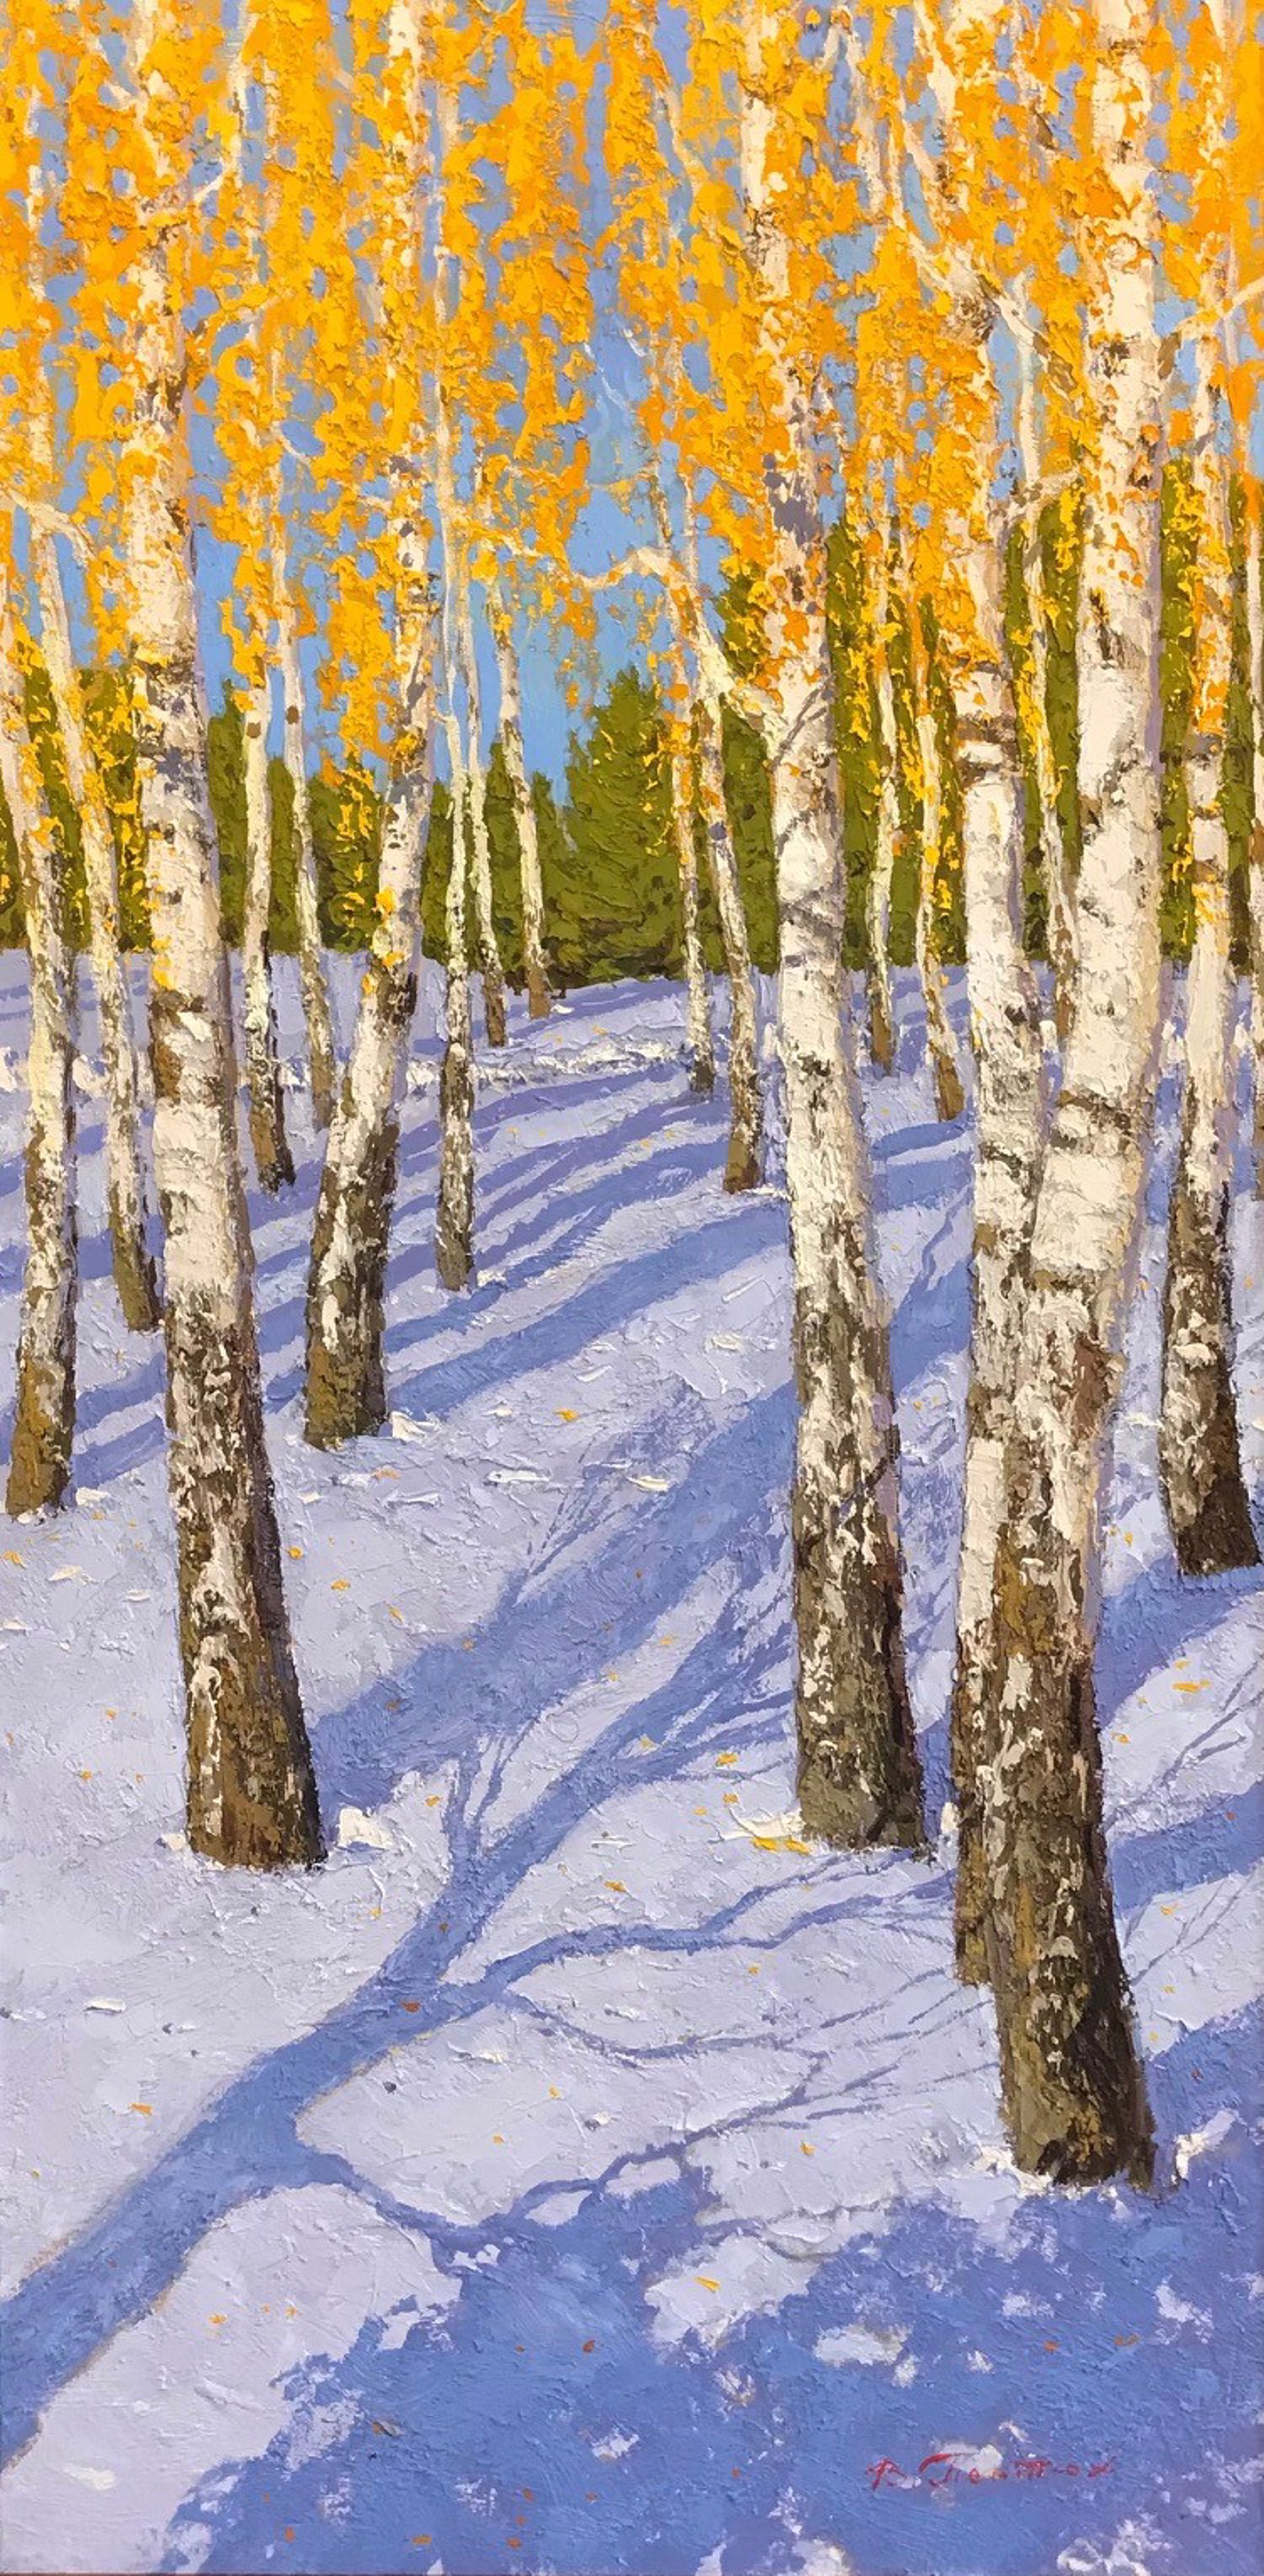 First Snow by Vladimir Pentjuh